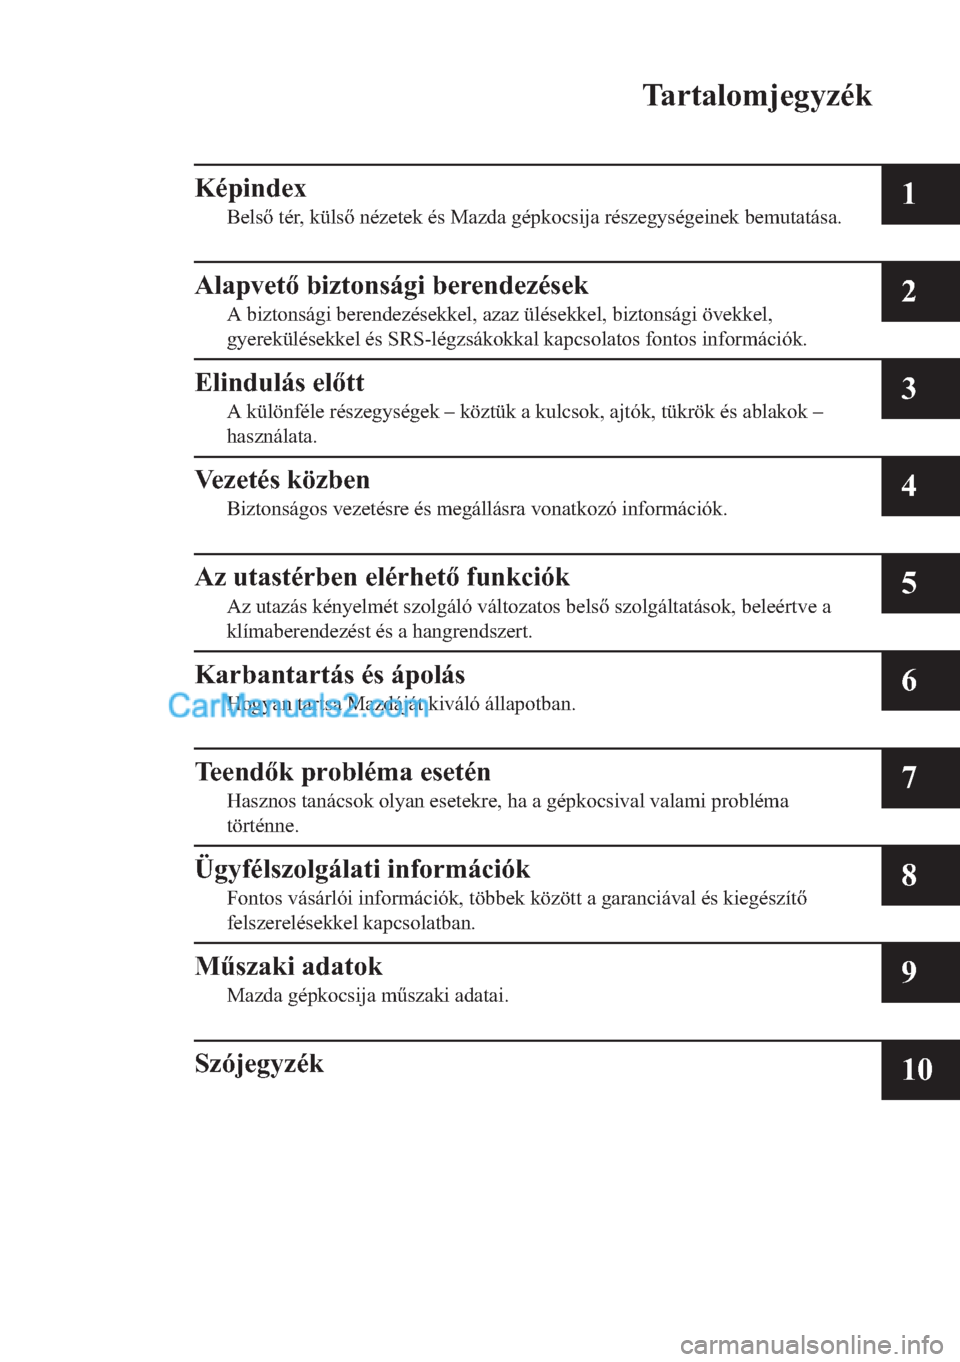 MAZDA MODEL 2 2019  Kezelési útmutató (in Hungarian) �7�D�U�W�D�O�R�P�M�H�J�\�]�p�N
�.�p�S�L�Q�G�H�[
�%�H�O�V��W�p�U���N�